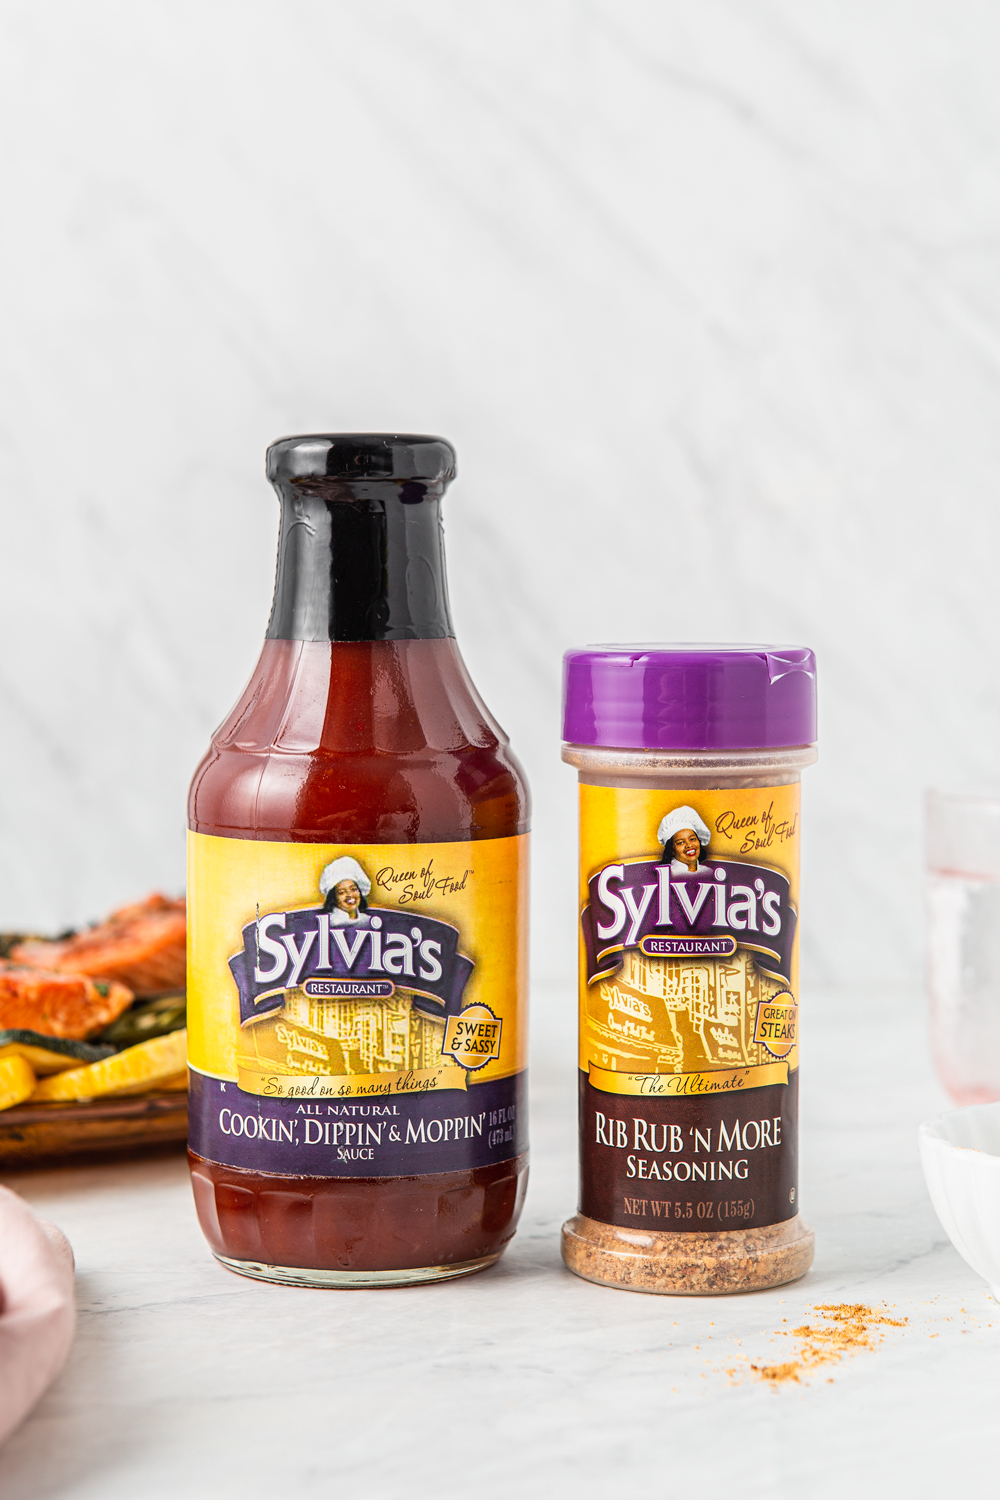 Sylvia's sauce and seasoning